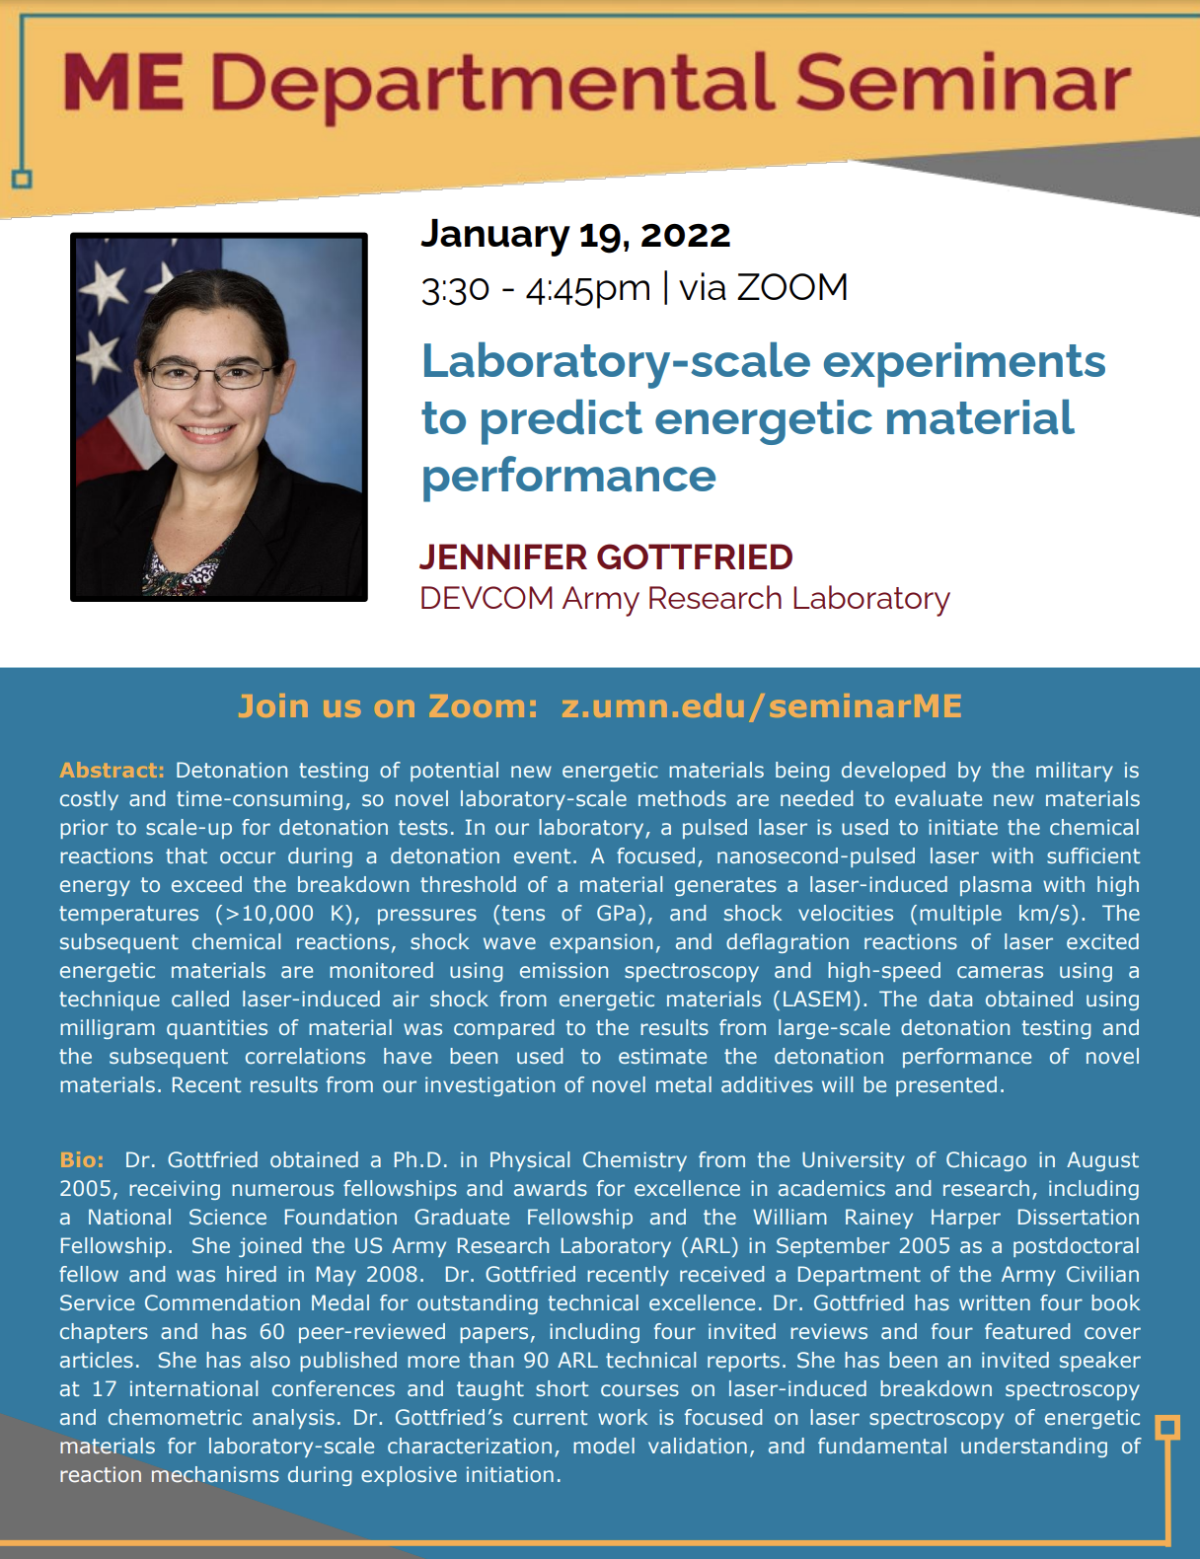 Departmental Seminar flyer for Jennifer Gottfried